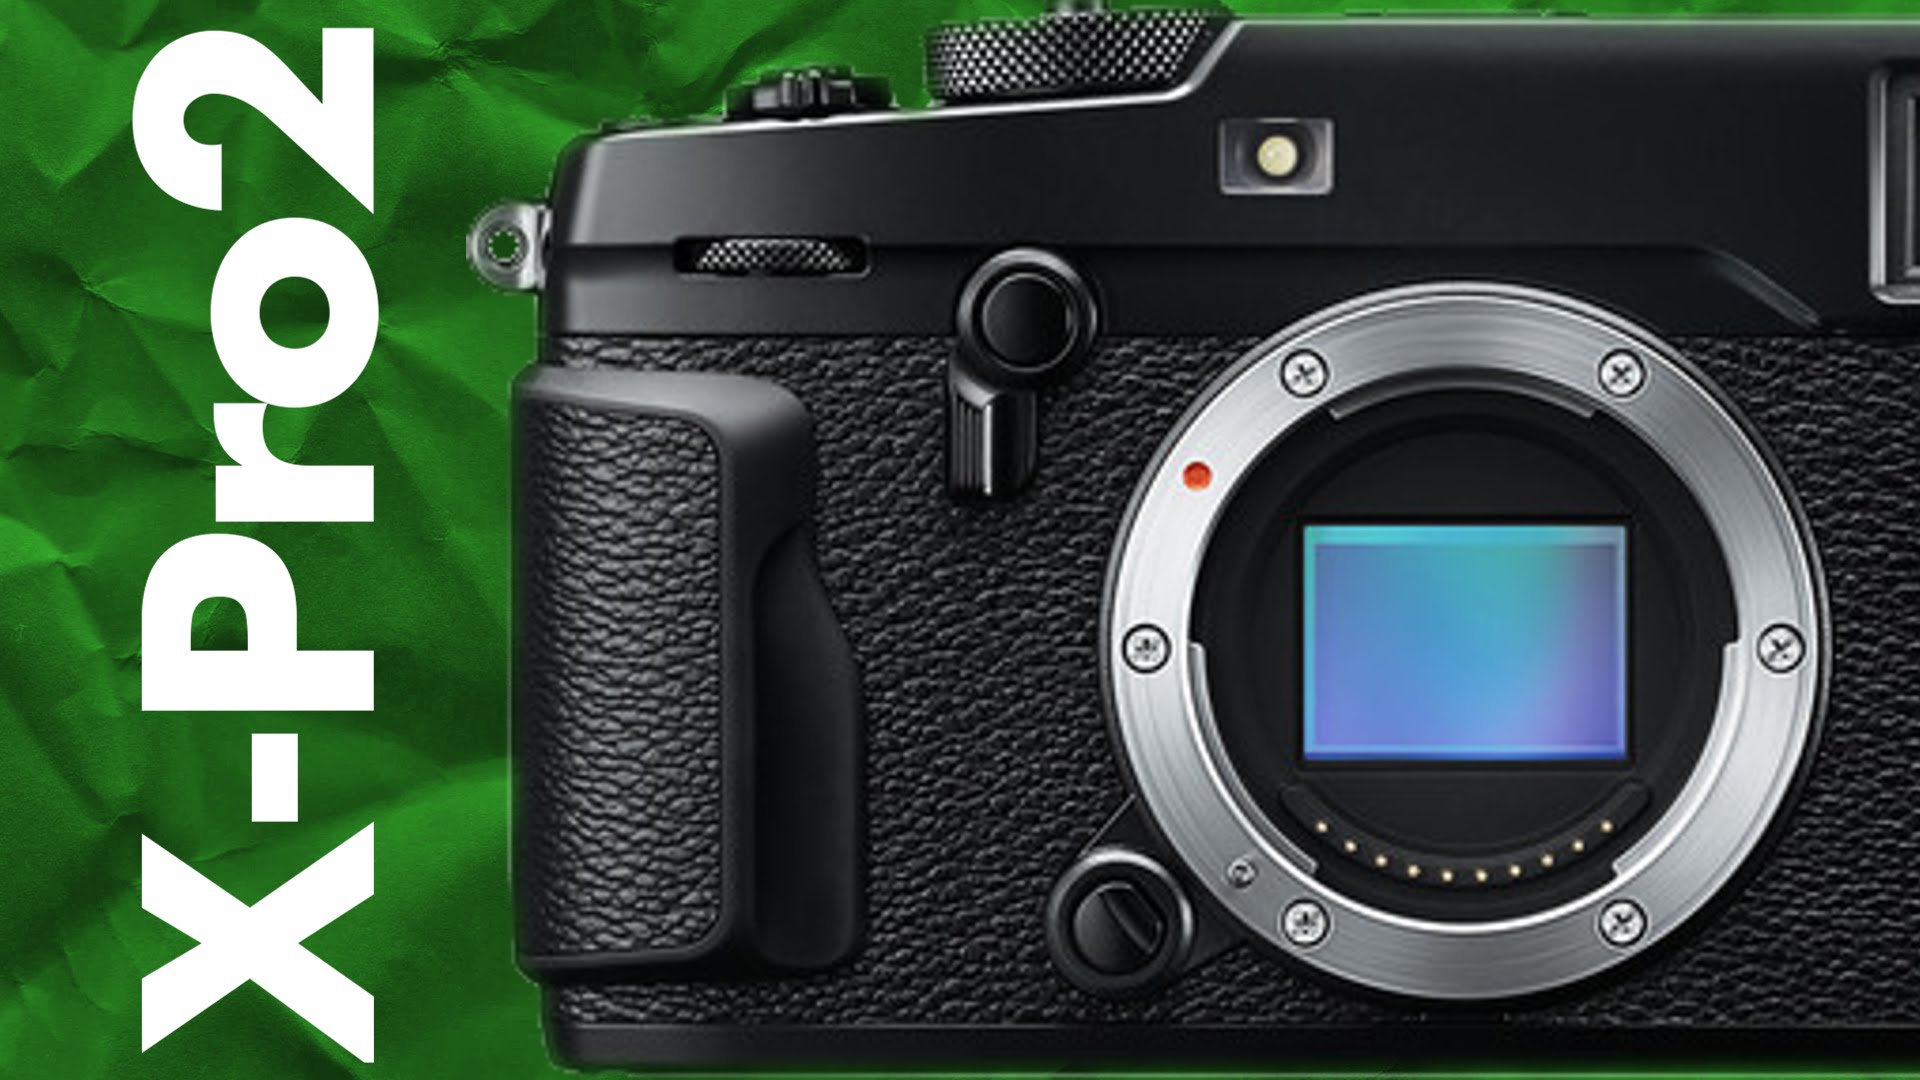 Fujifilm X-Pro2 Mirrorless Camera Overview